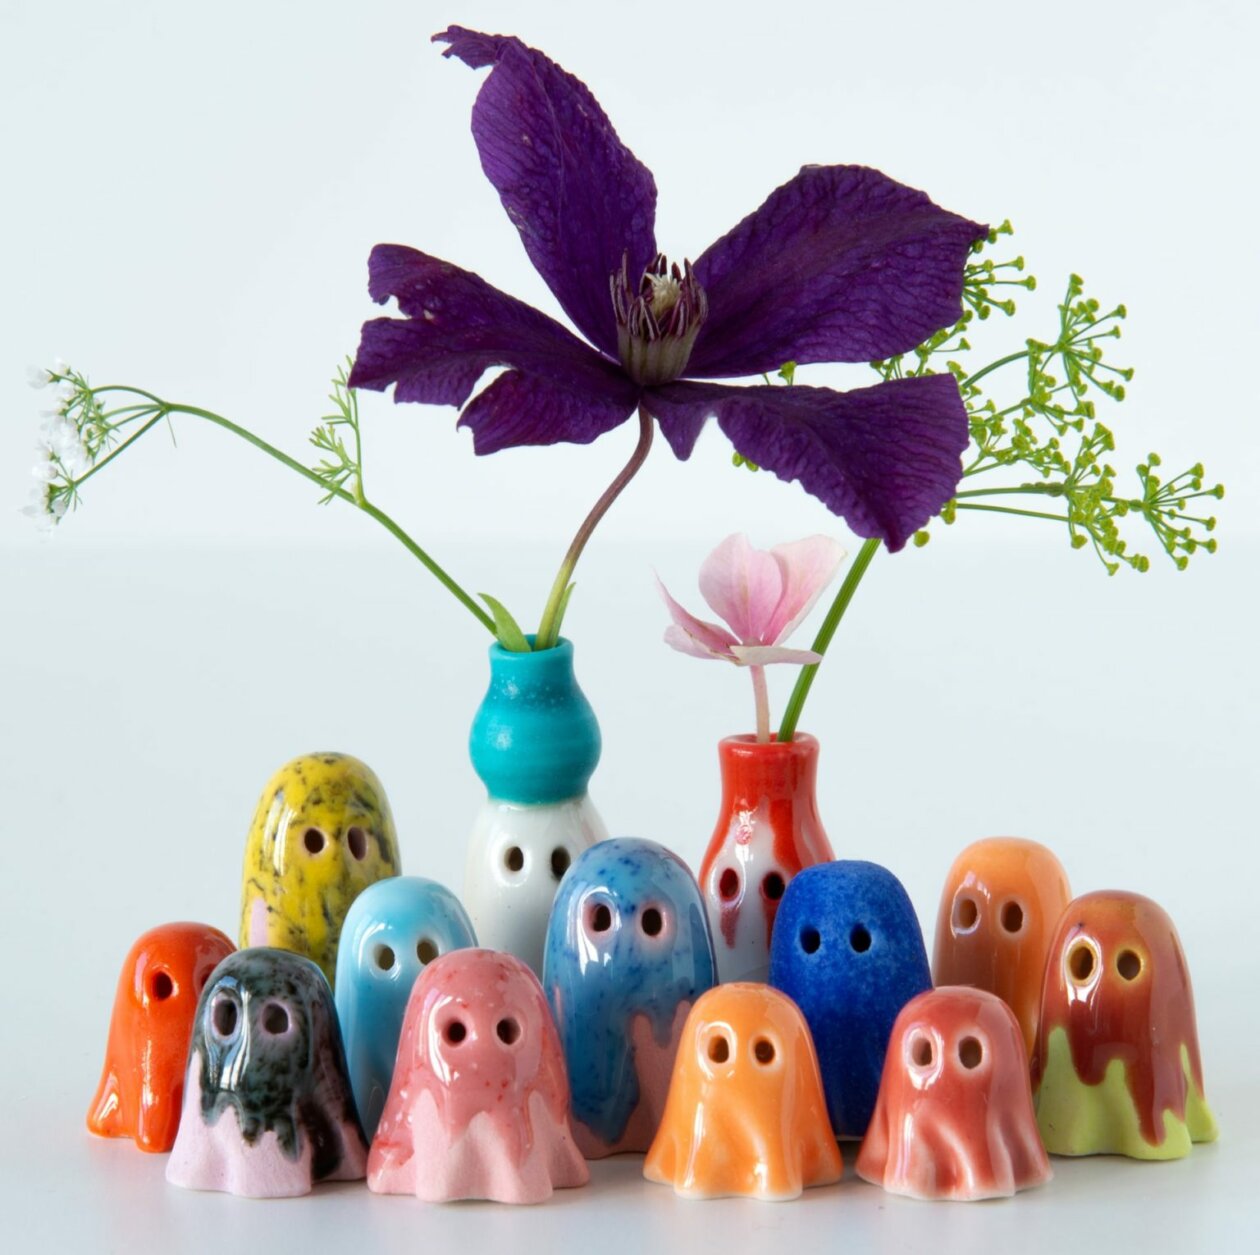 Fun Tiny Ceramic Ghosts By Lisa Agnetun (5)